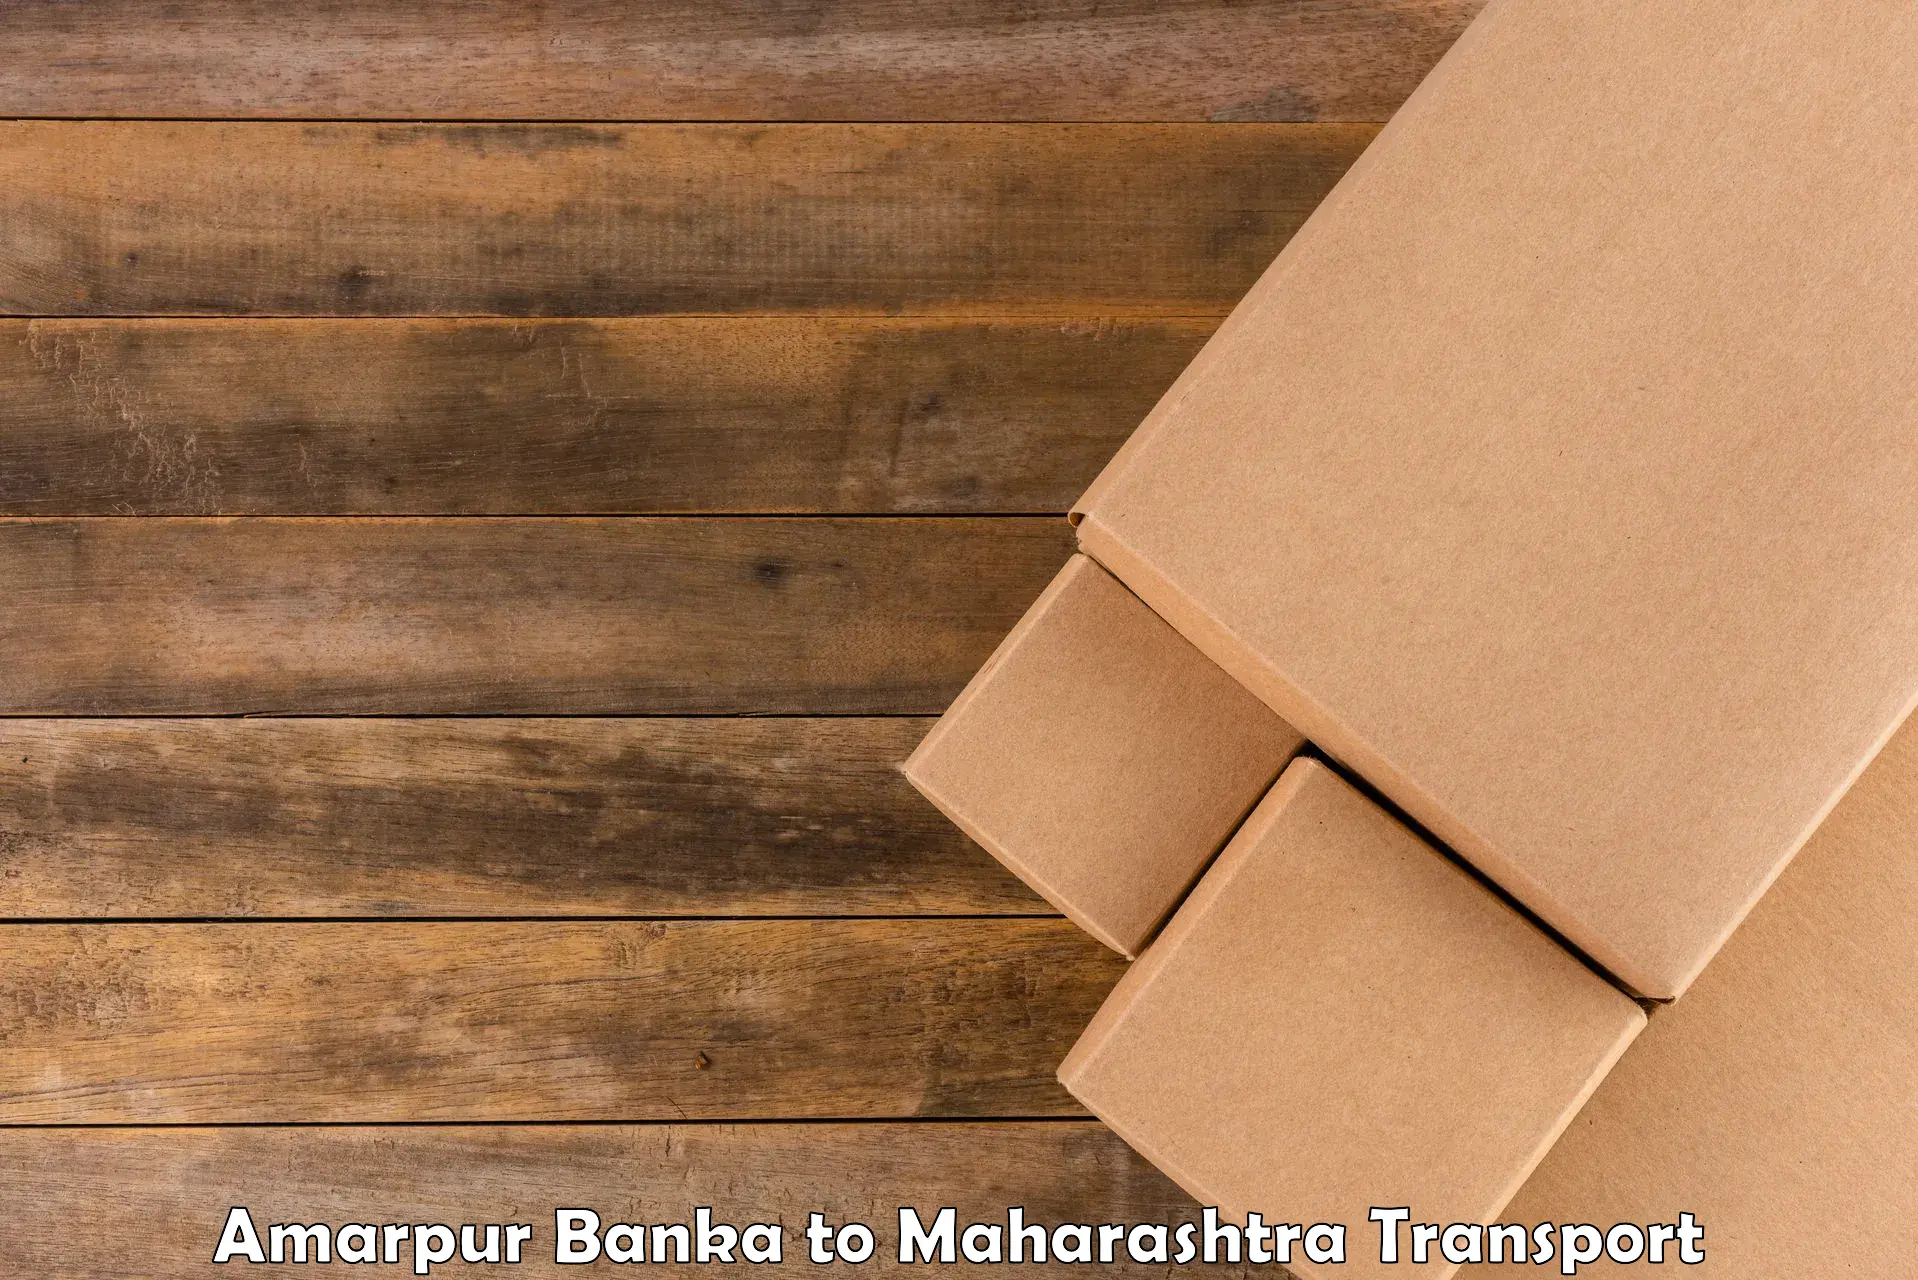 Truck transport companies in India Amarpur Banka to Lonere